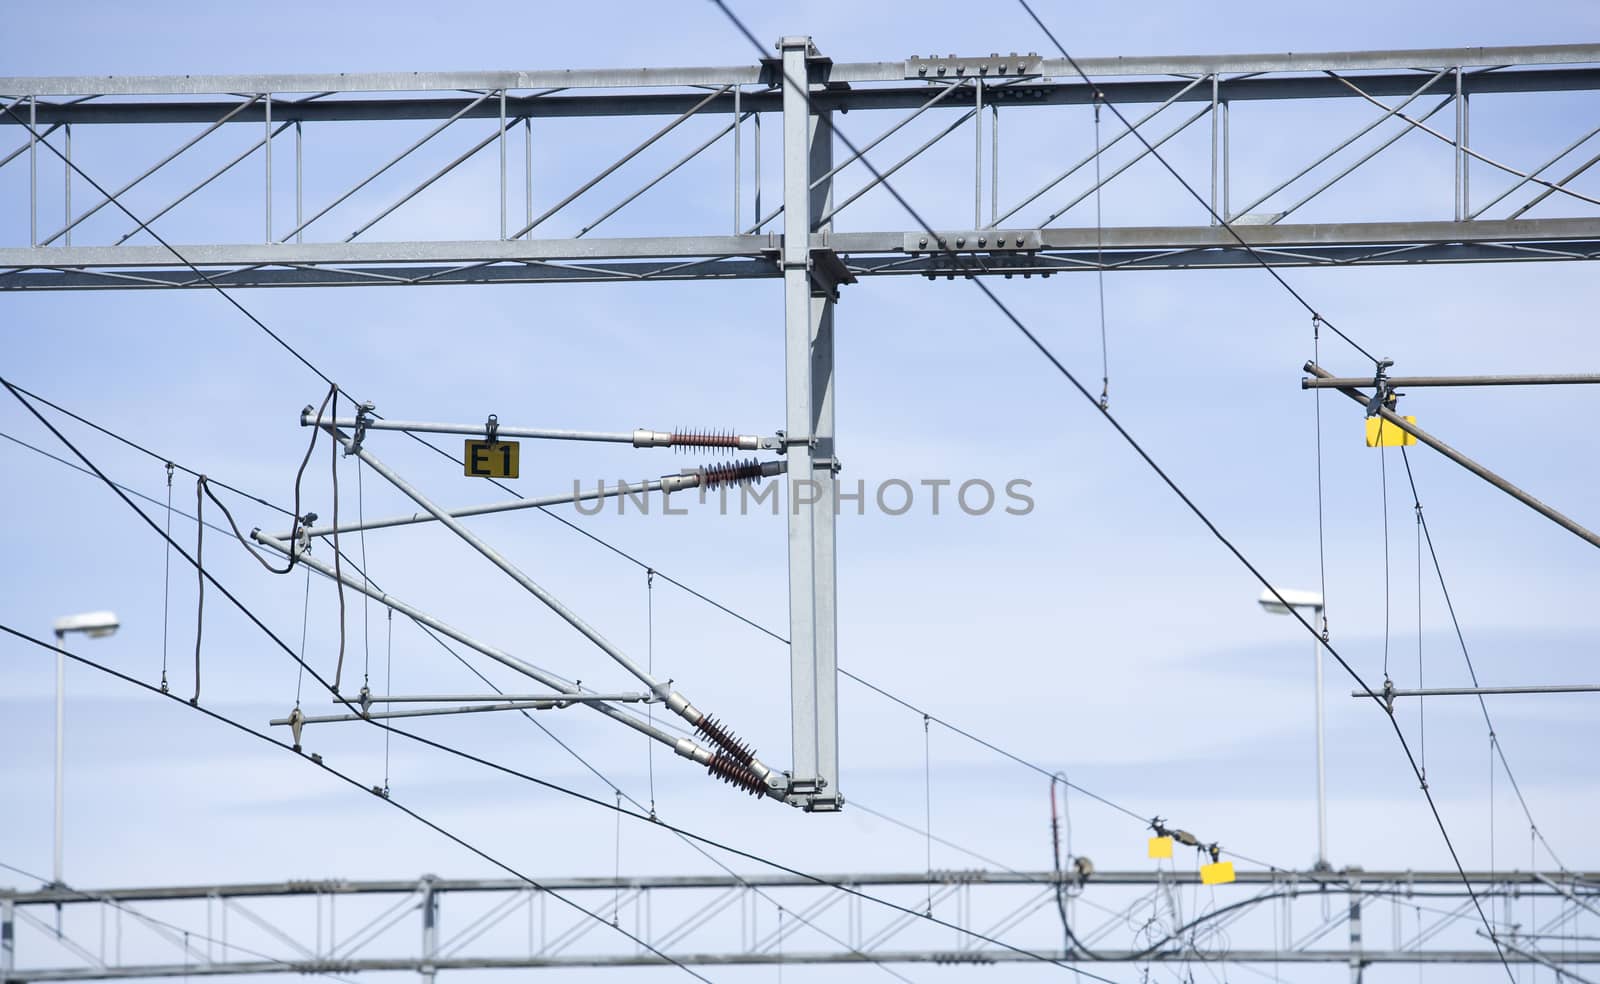 Train Power Cables by gemenacom